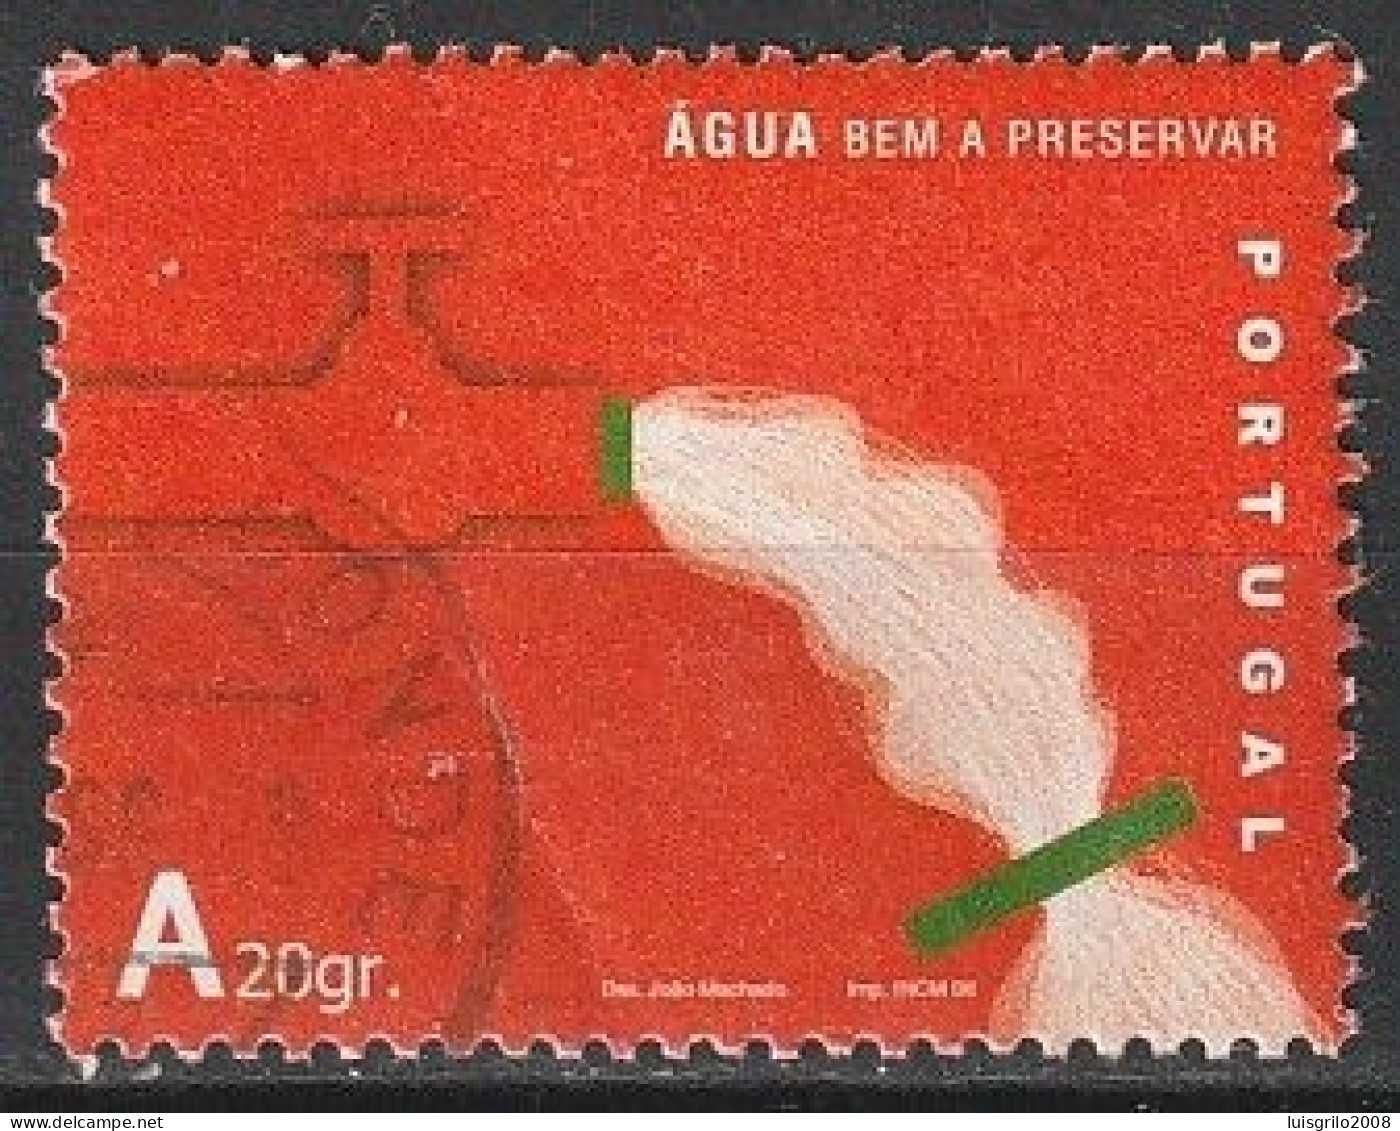 Portugal, 2006 - Água, A20gr -|- Mundifil - 3387 - Usado